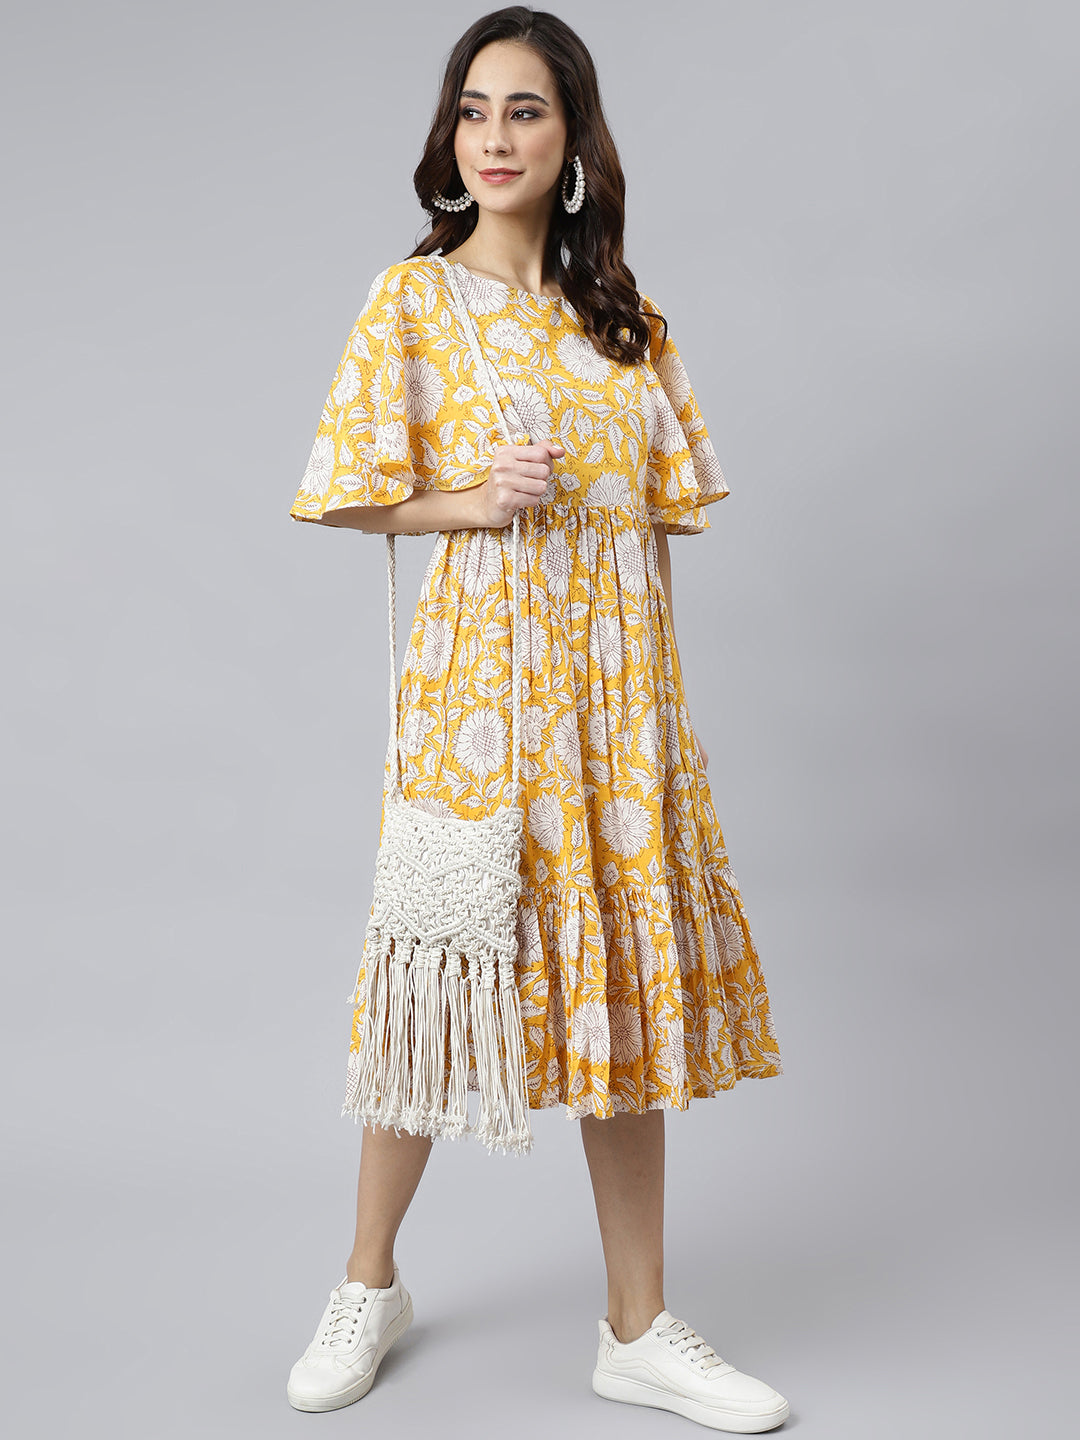 Women's Floral Printed Yellow Cotton Dress - Janasya USA